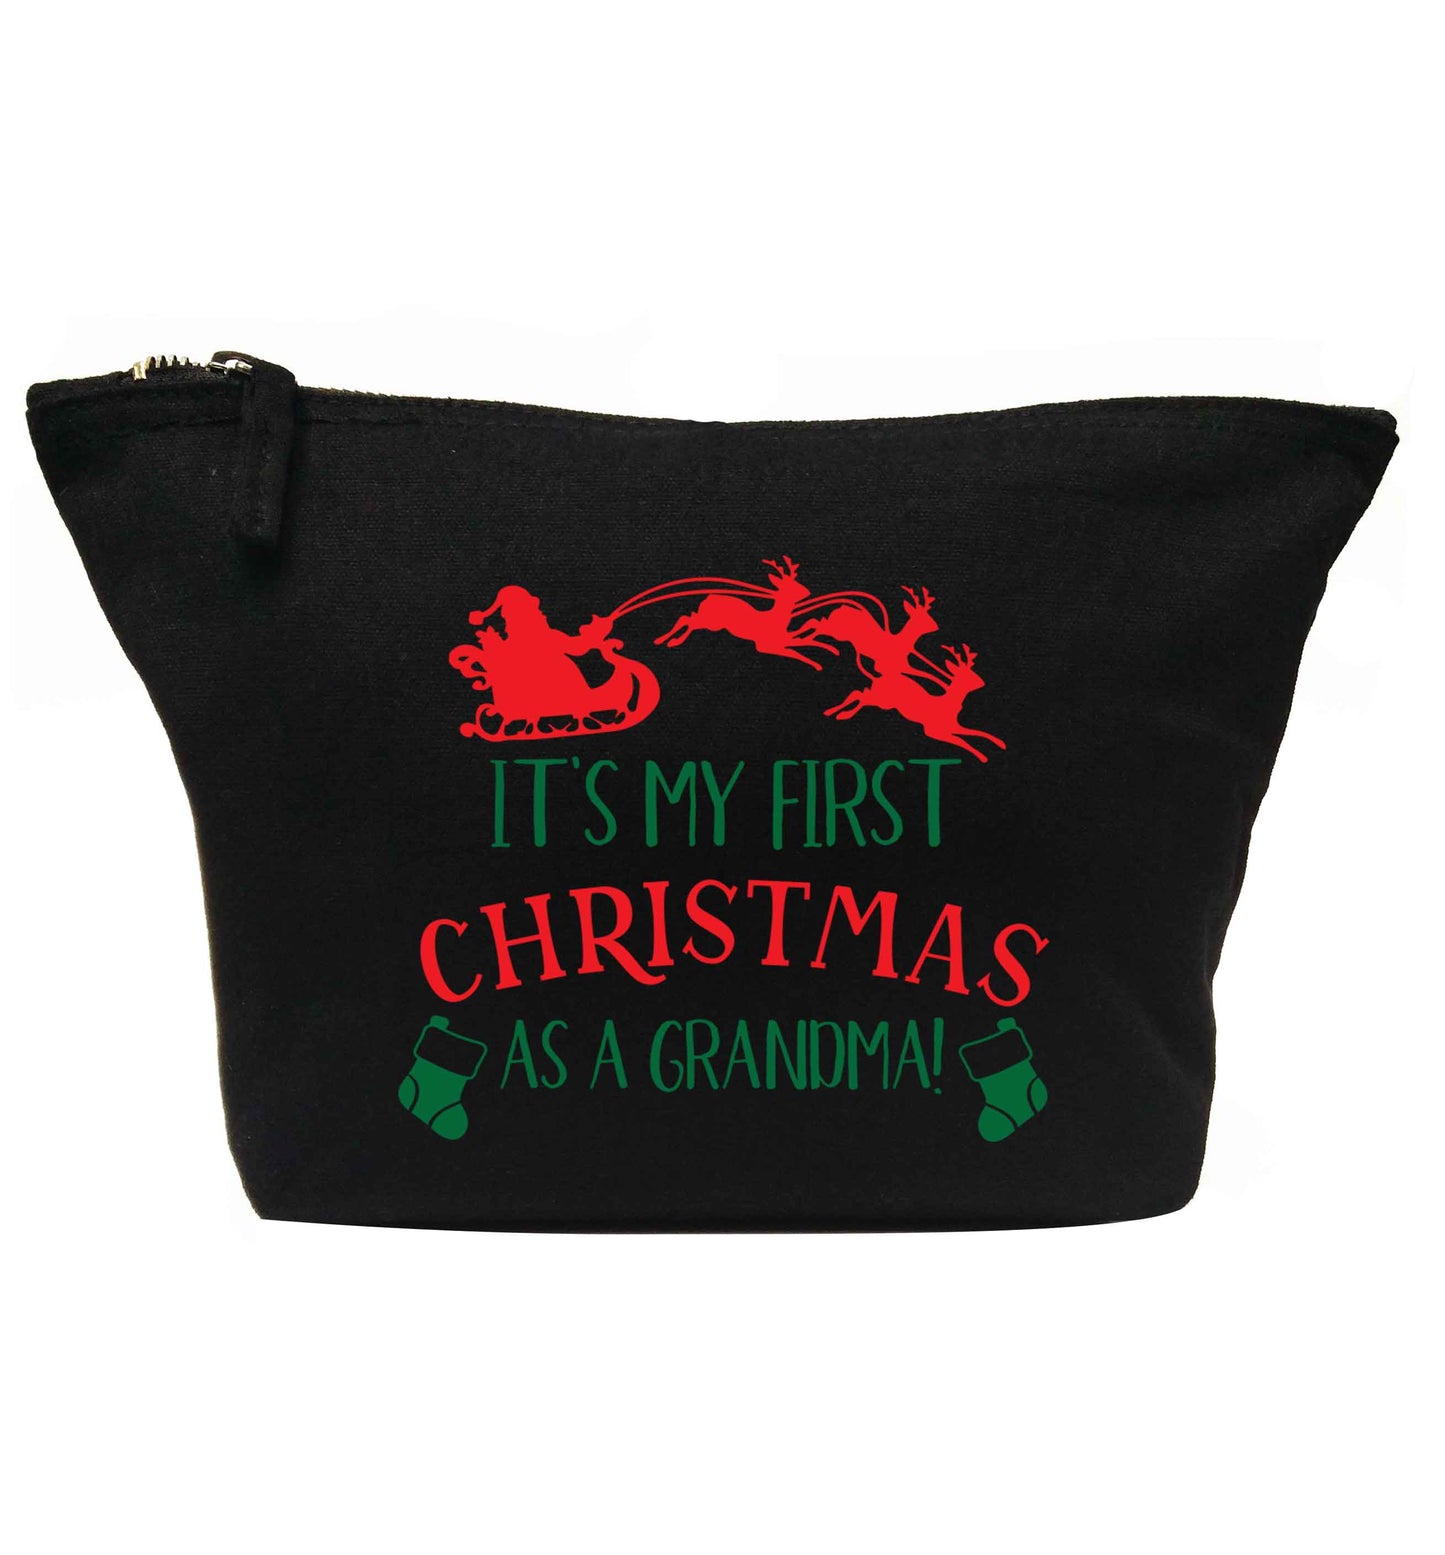 It's my first Christmas as a grandma! | makeup / wash bag